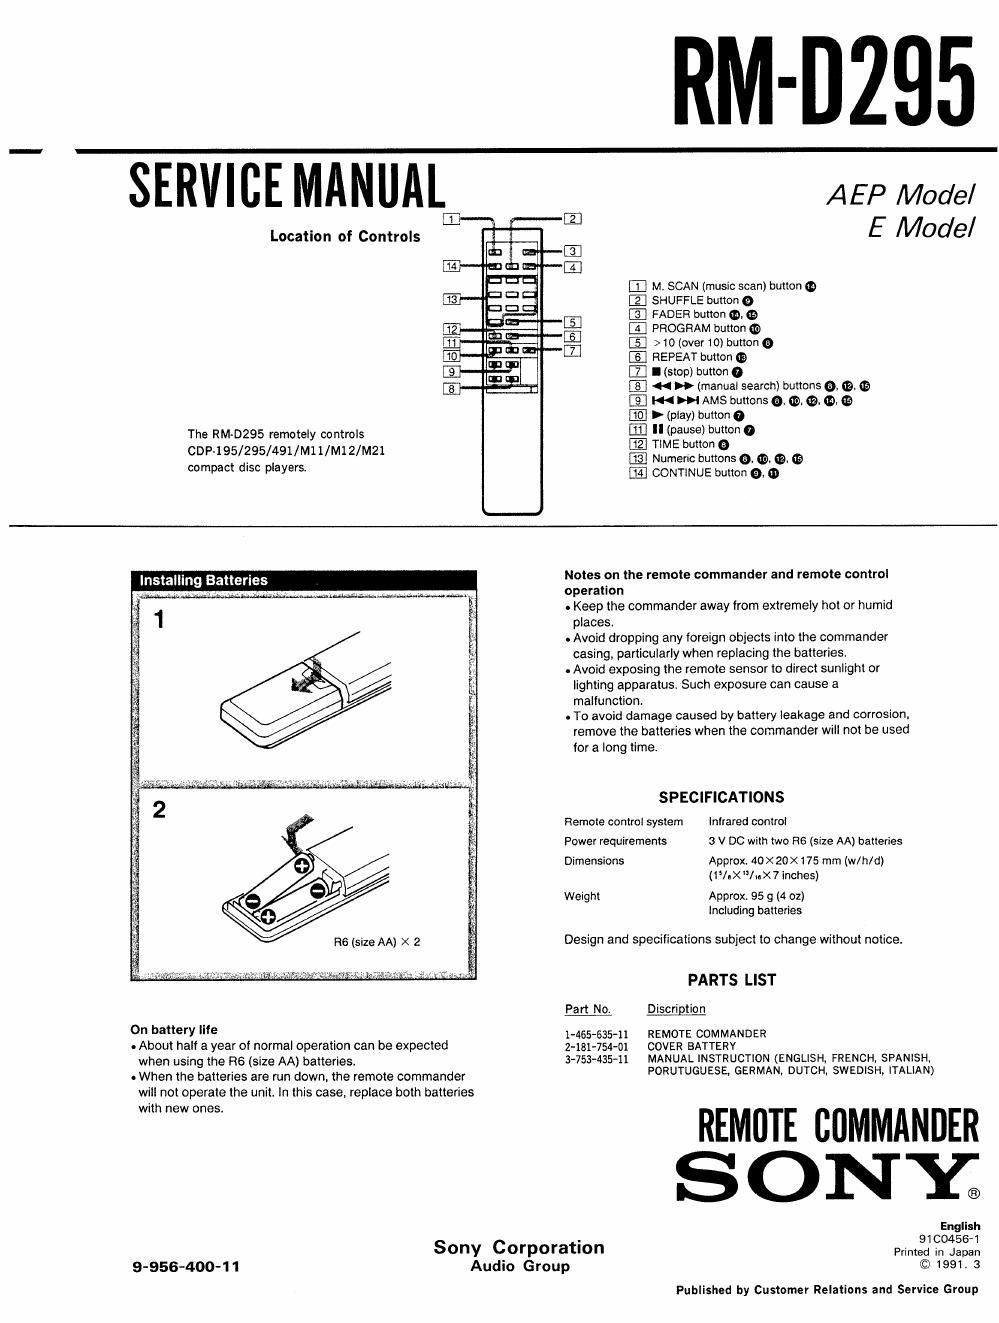 sony rm d 295 service manual